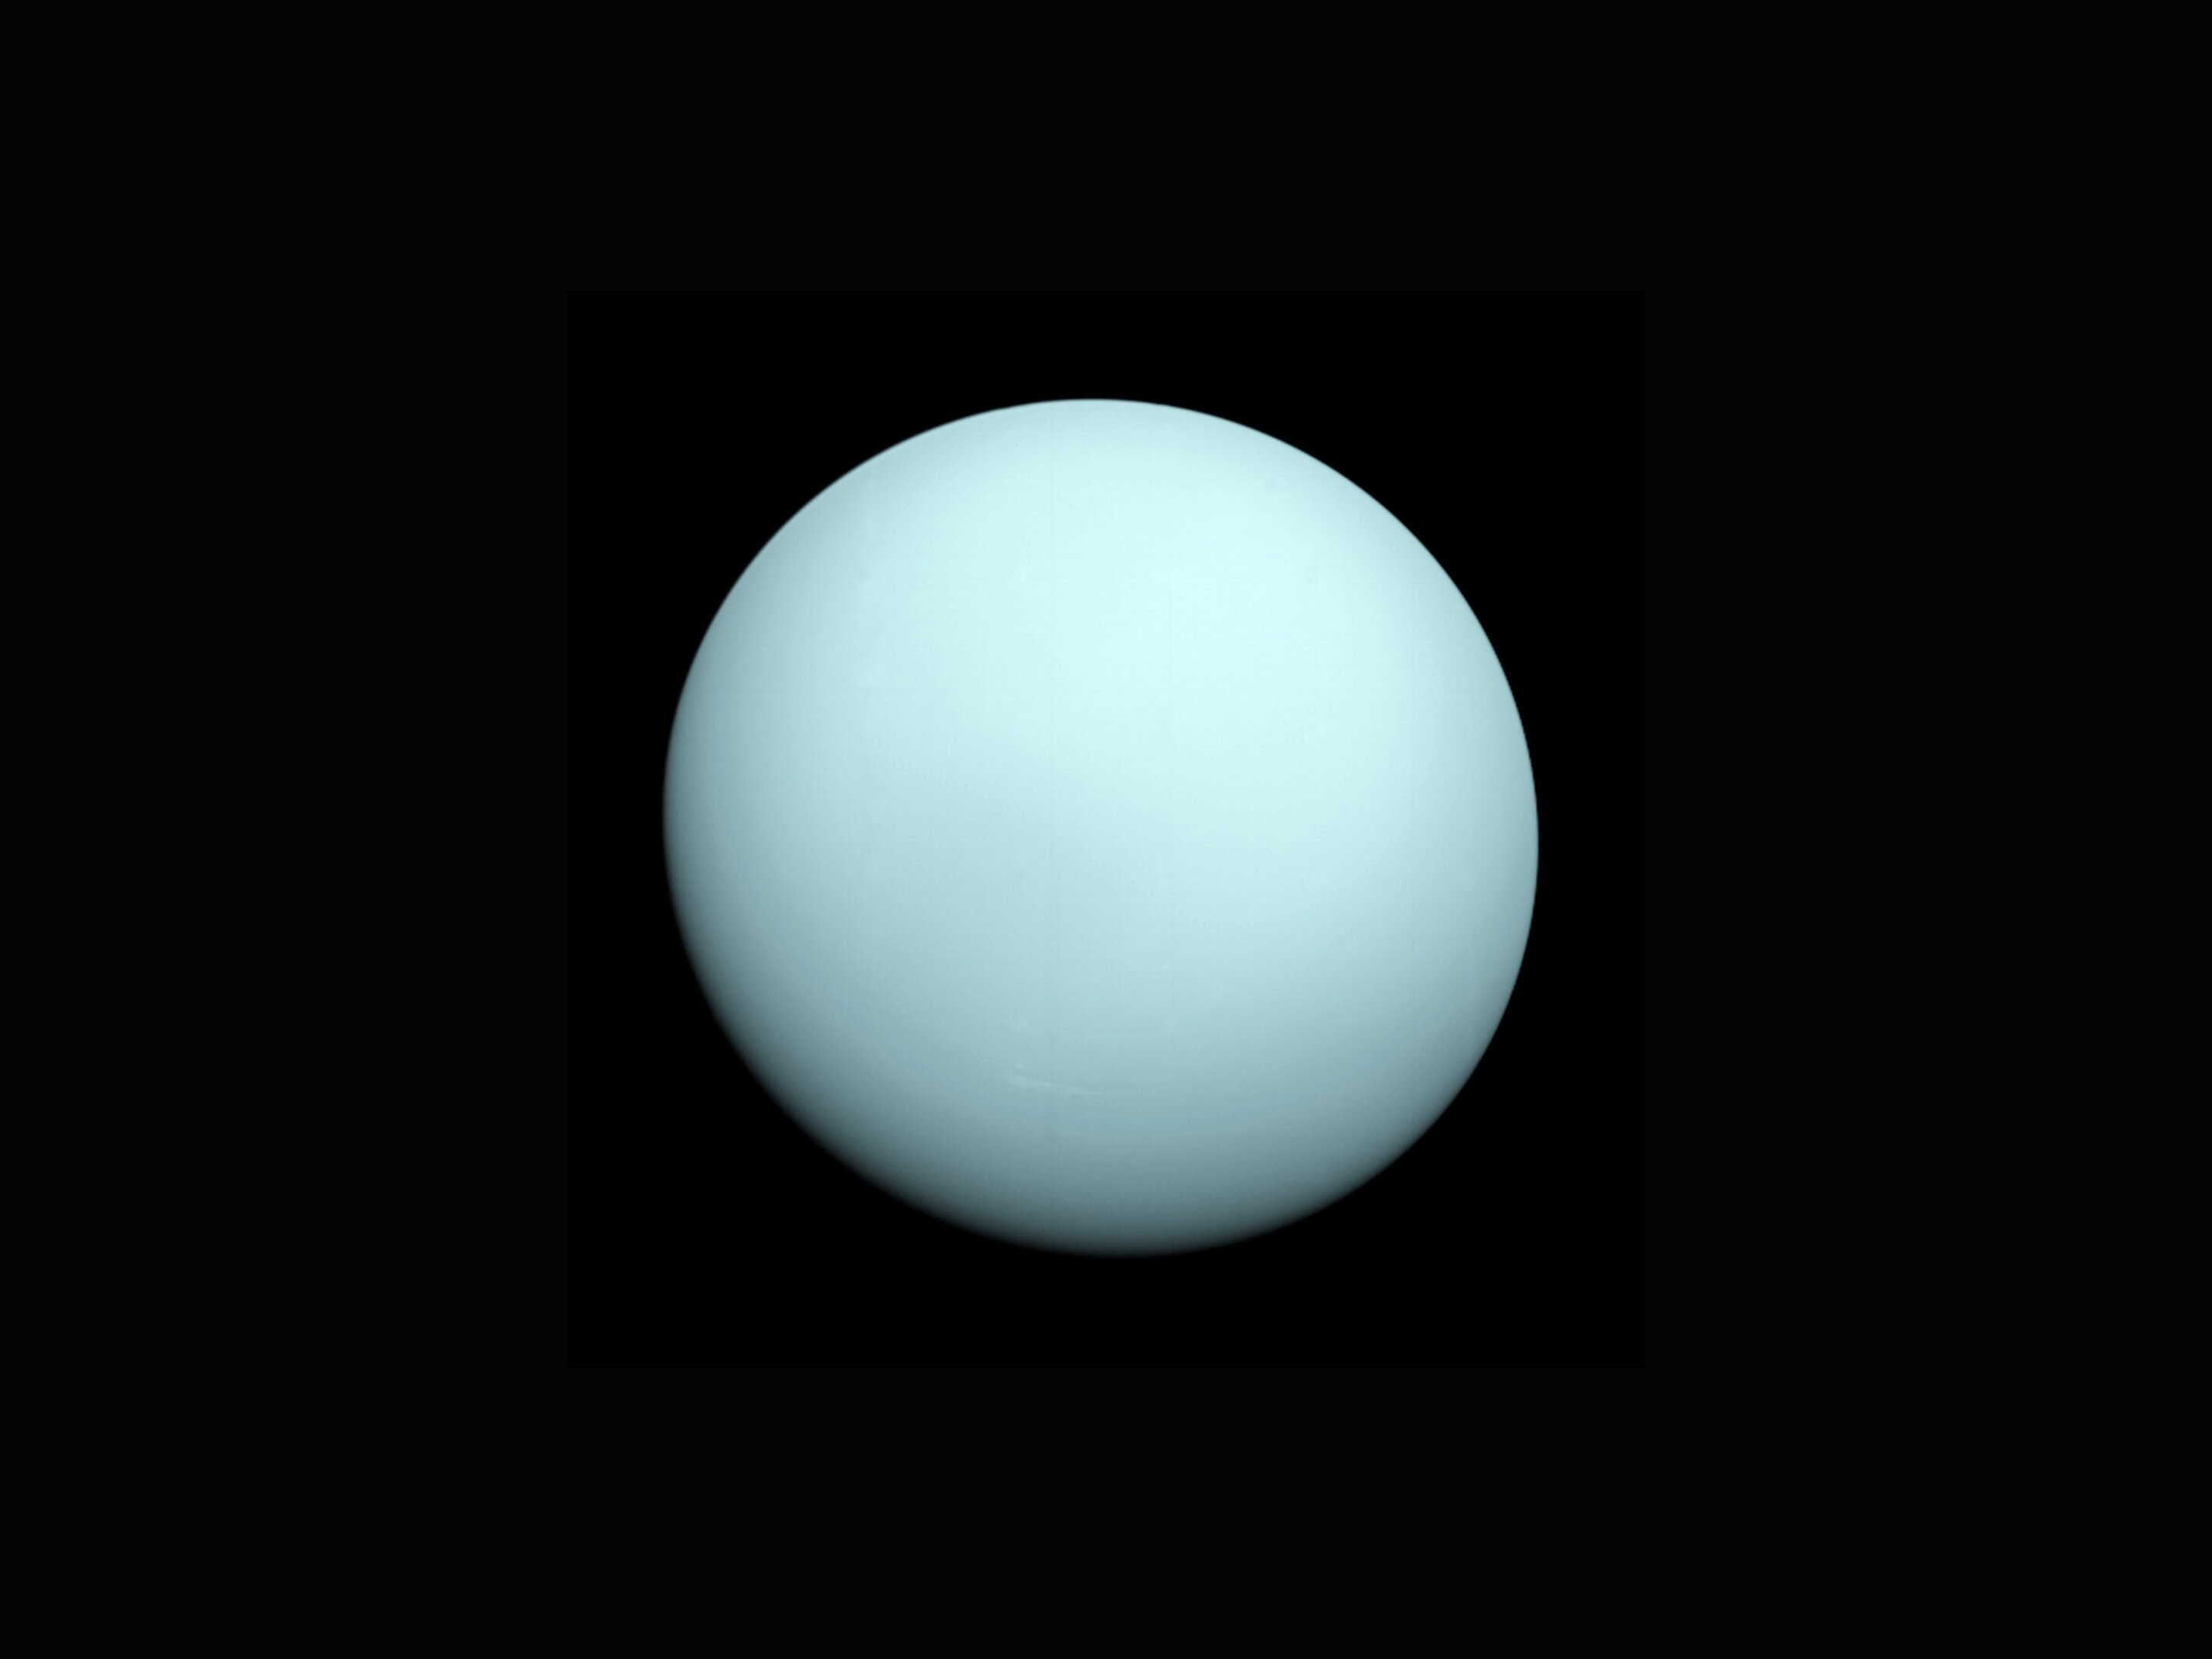 Uranus Planet Information